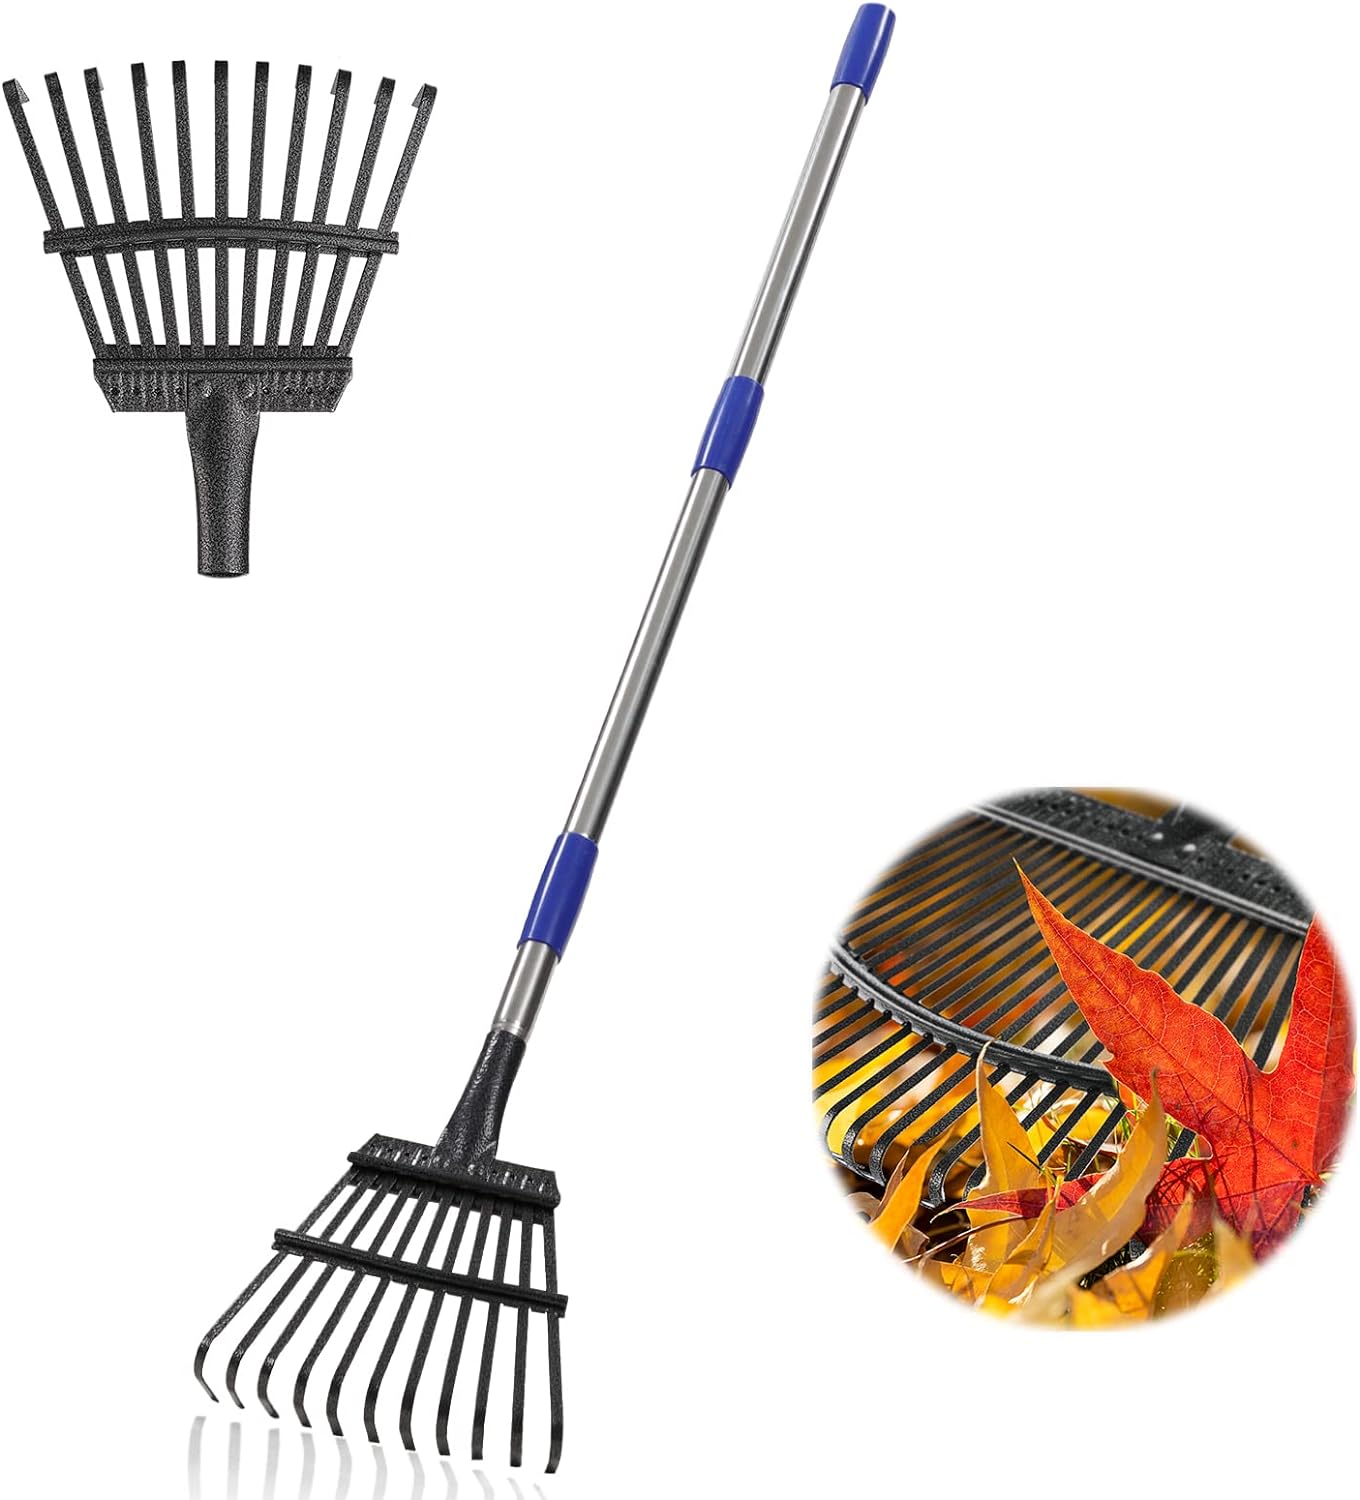 Bird Twig Leaf Rake for Gardening - 8.5" Wide Small Garden Rake for Leaves,11 Tines Metal Shrub Rake,32-74" Adjustable Handle -